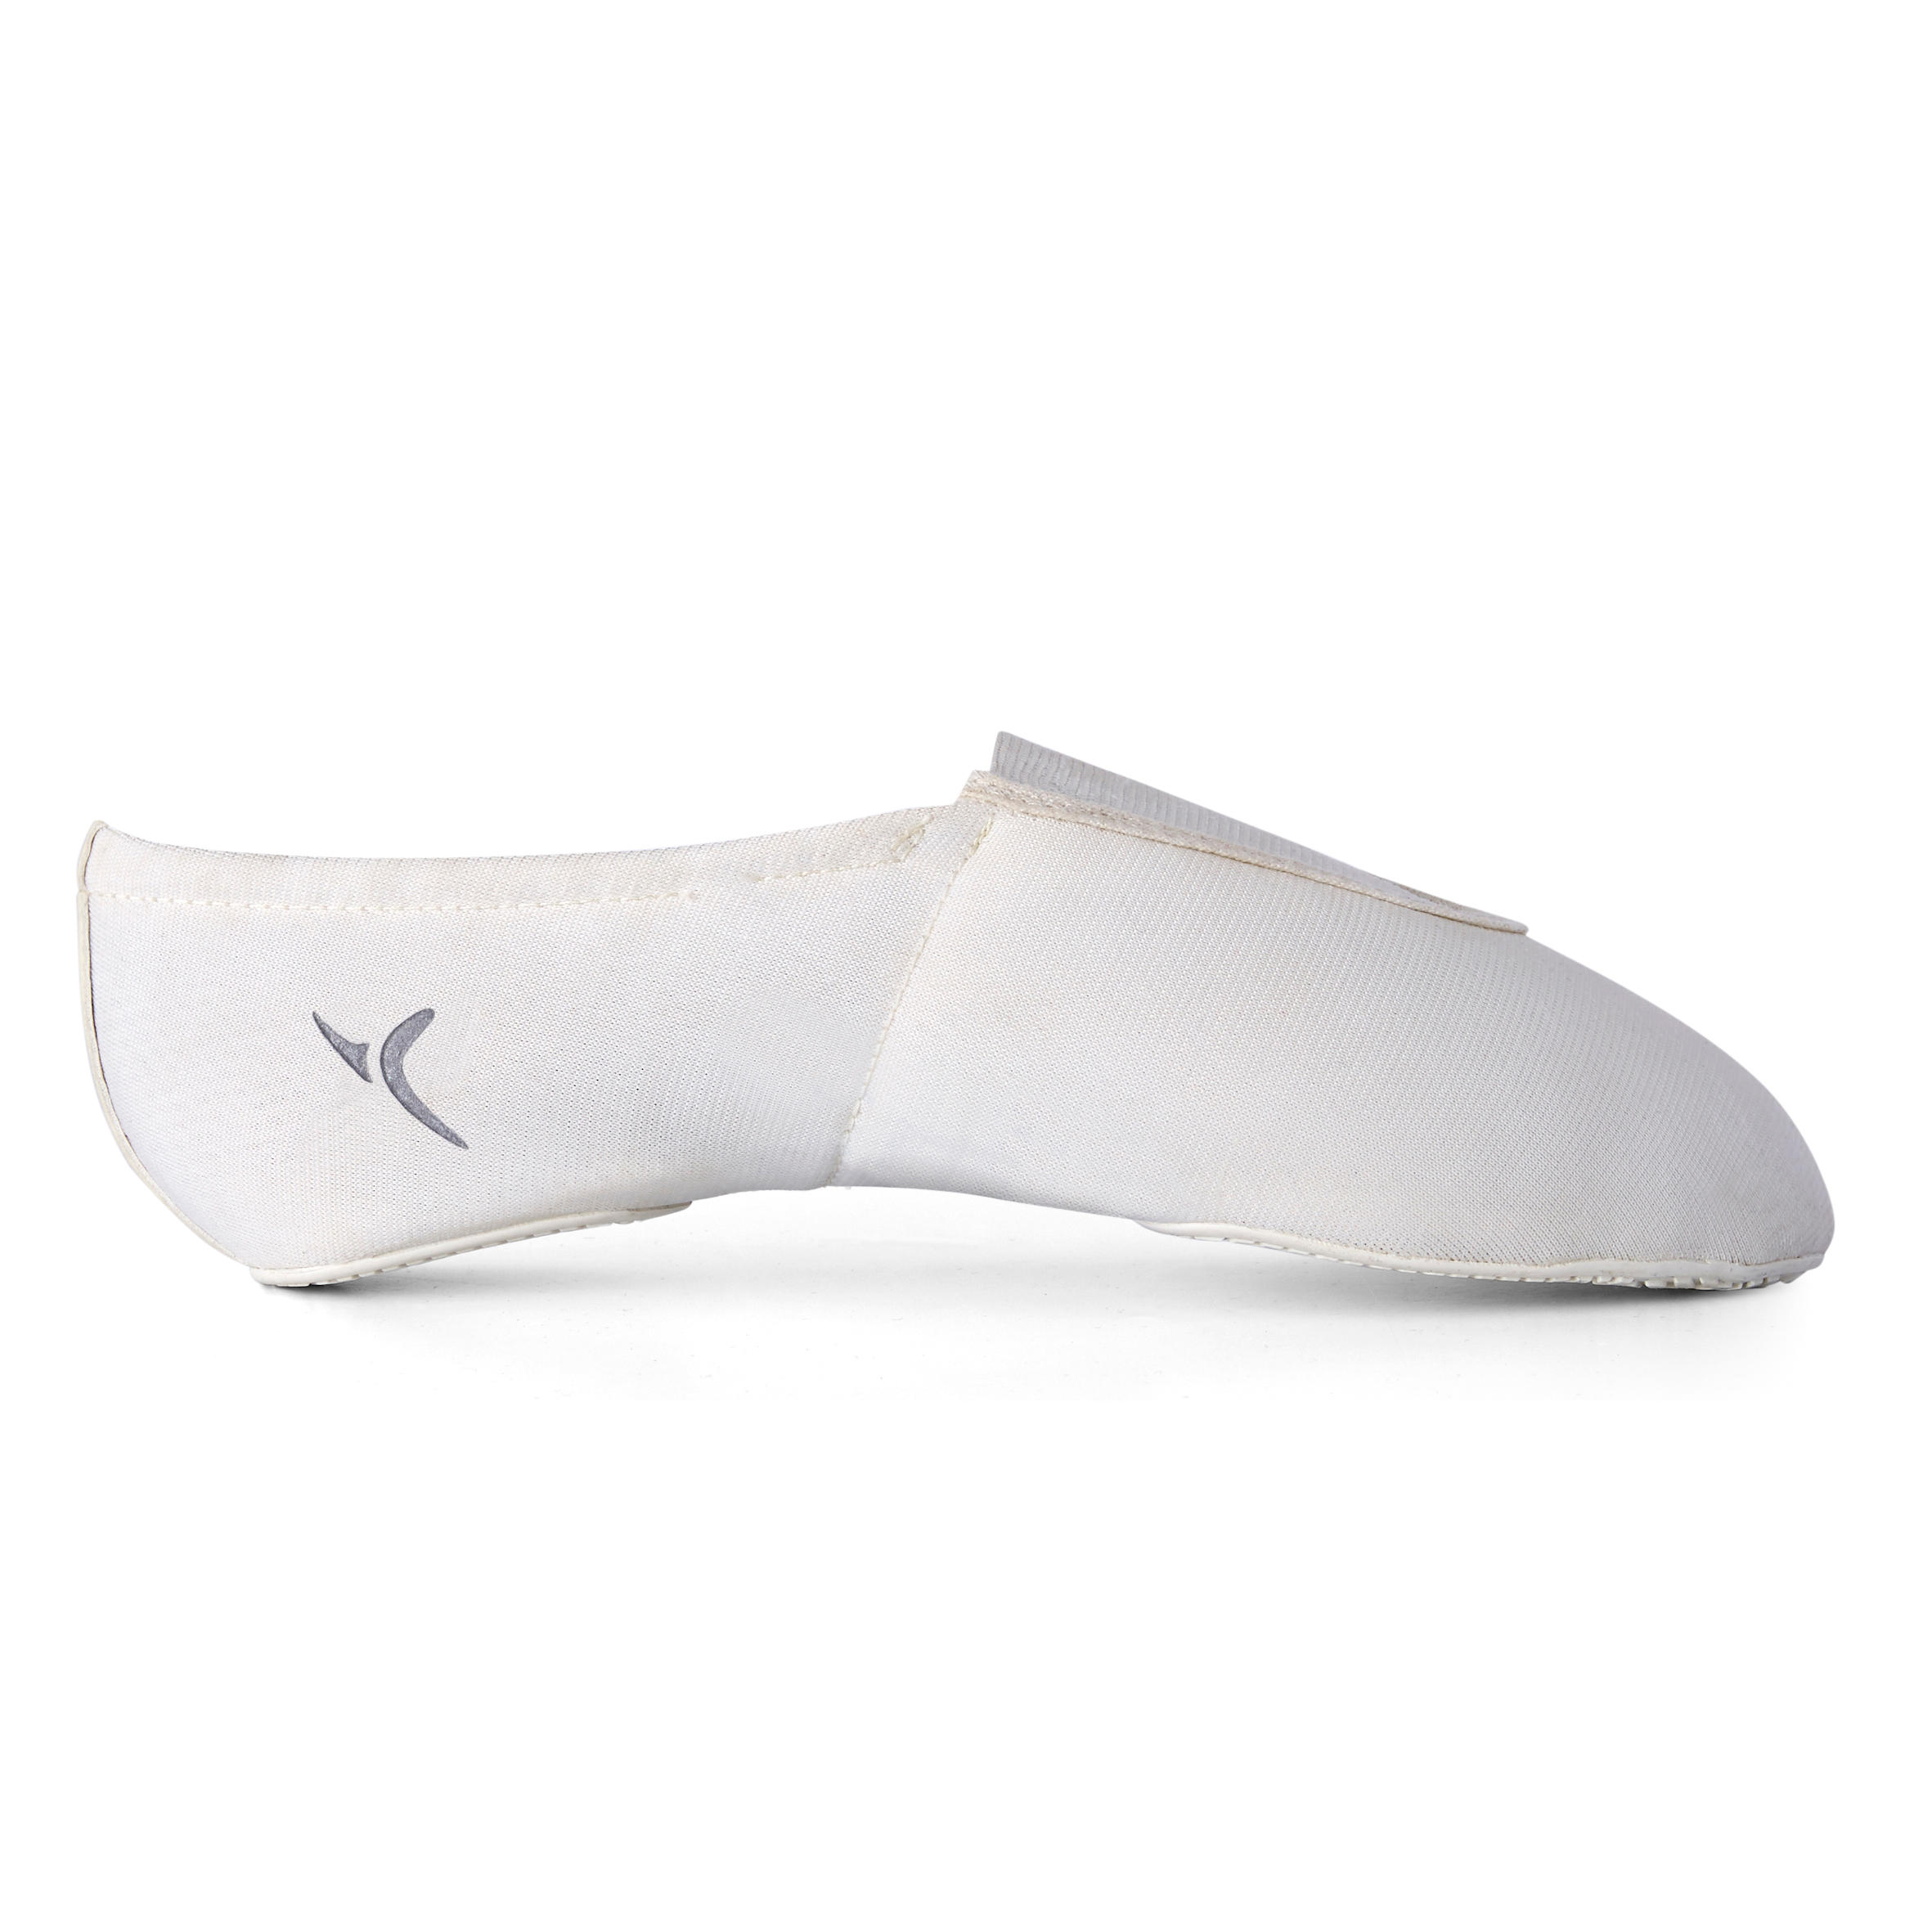 Boys' and Girl's Artistic Gymnastics Mesh Shoes 500 - White 4/4